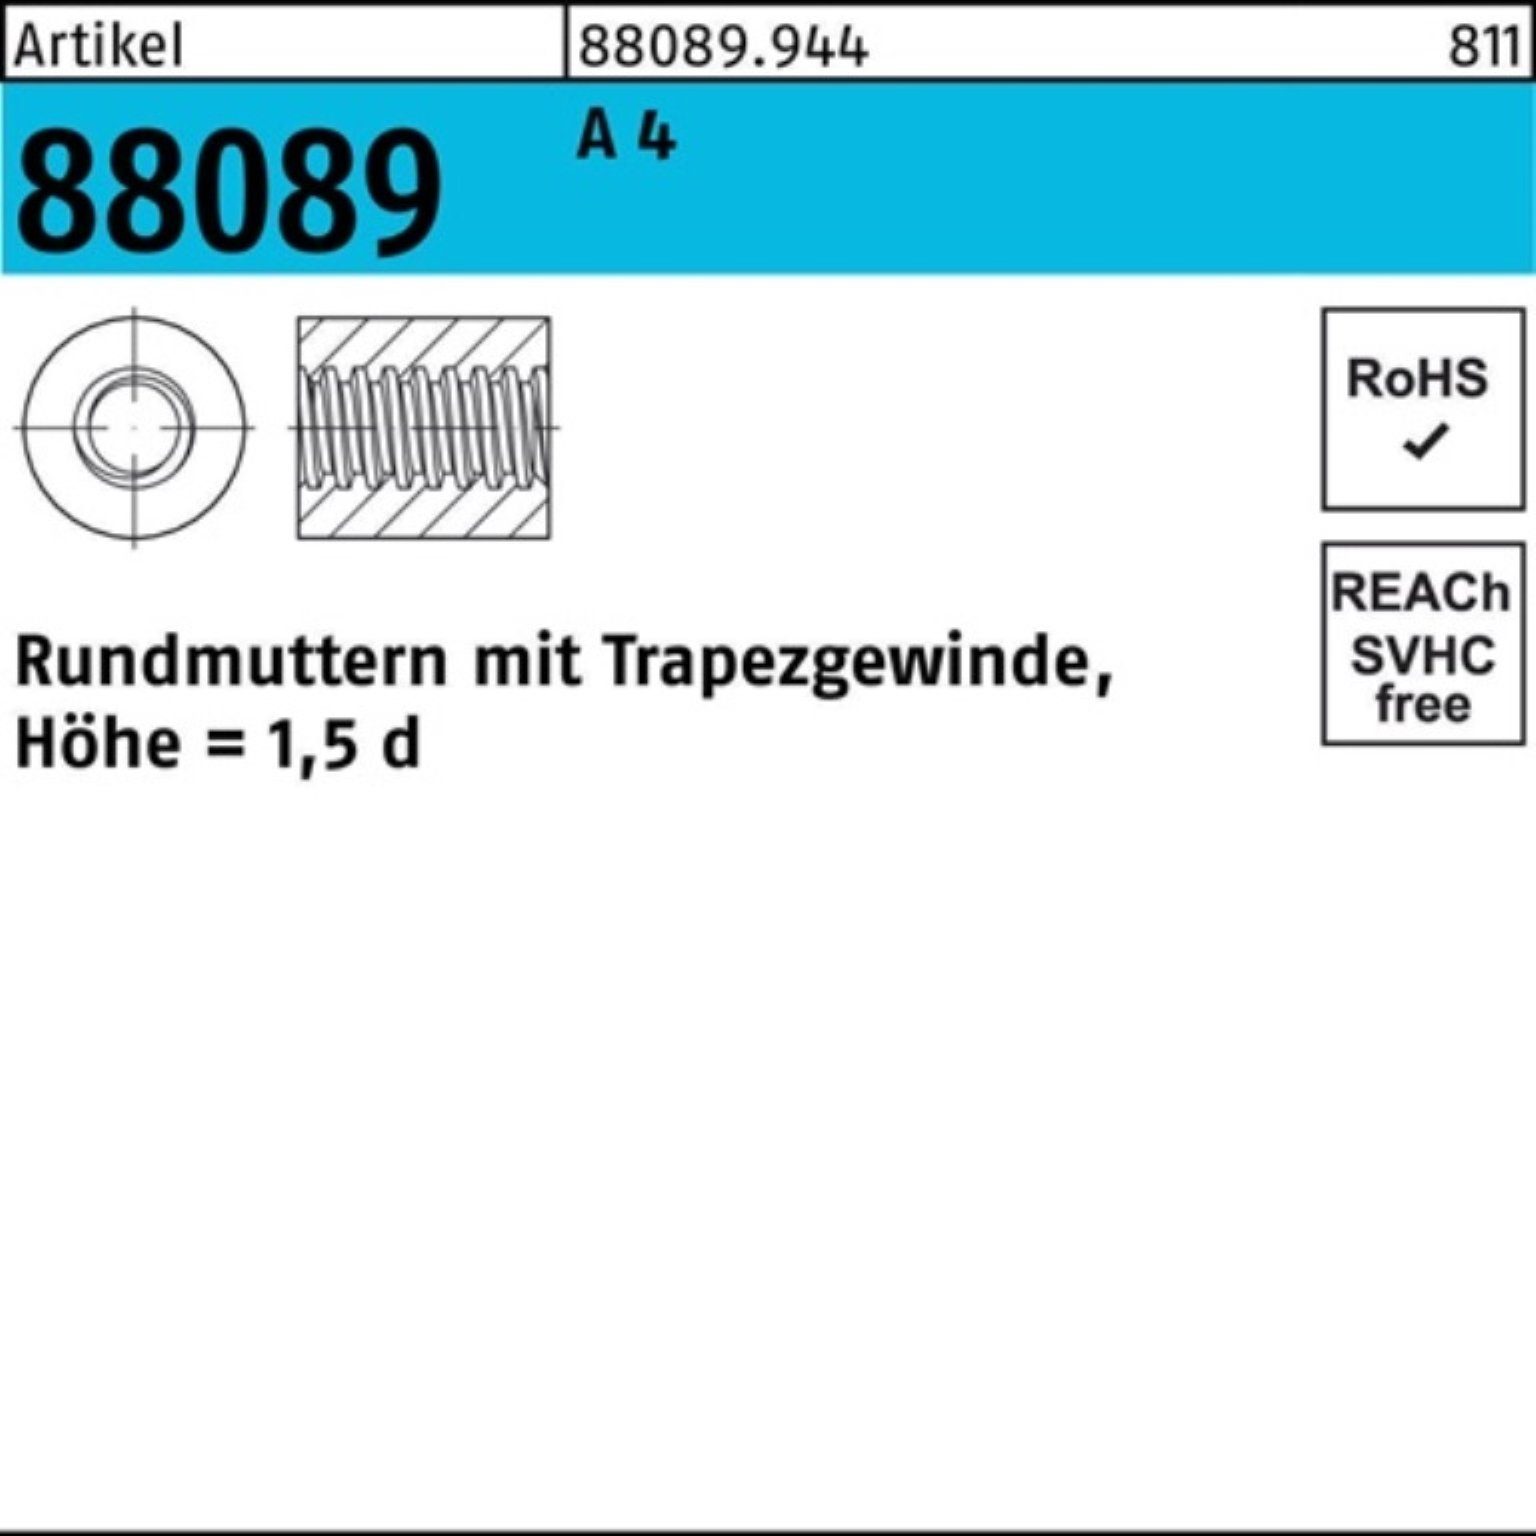 Reyher Rundmutter 100er Pack Rundmutter R 88089 Trapezgewinde TR 30x 6 -60 A 4 Höhe=1,5